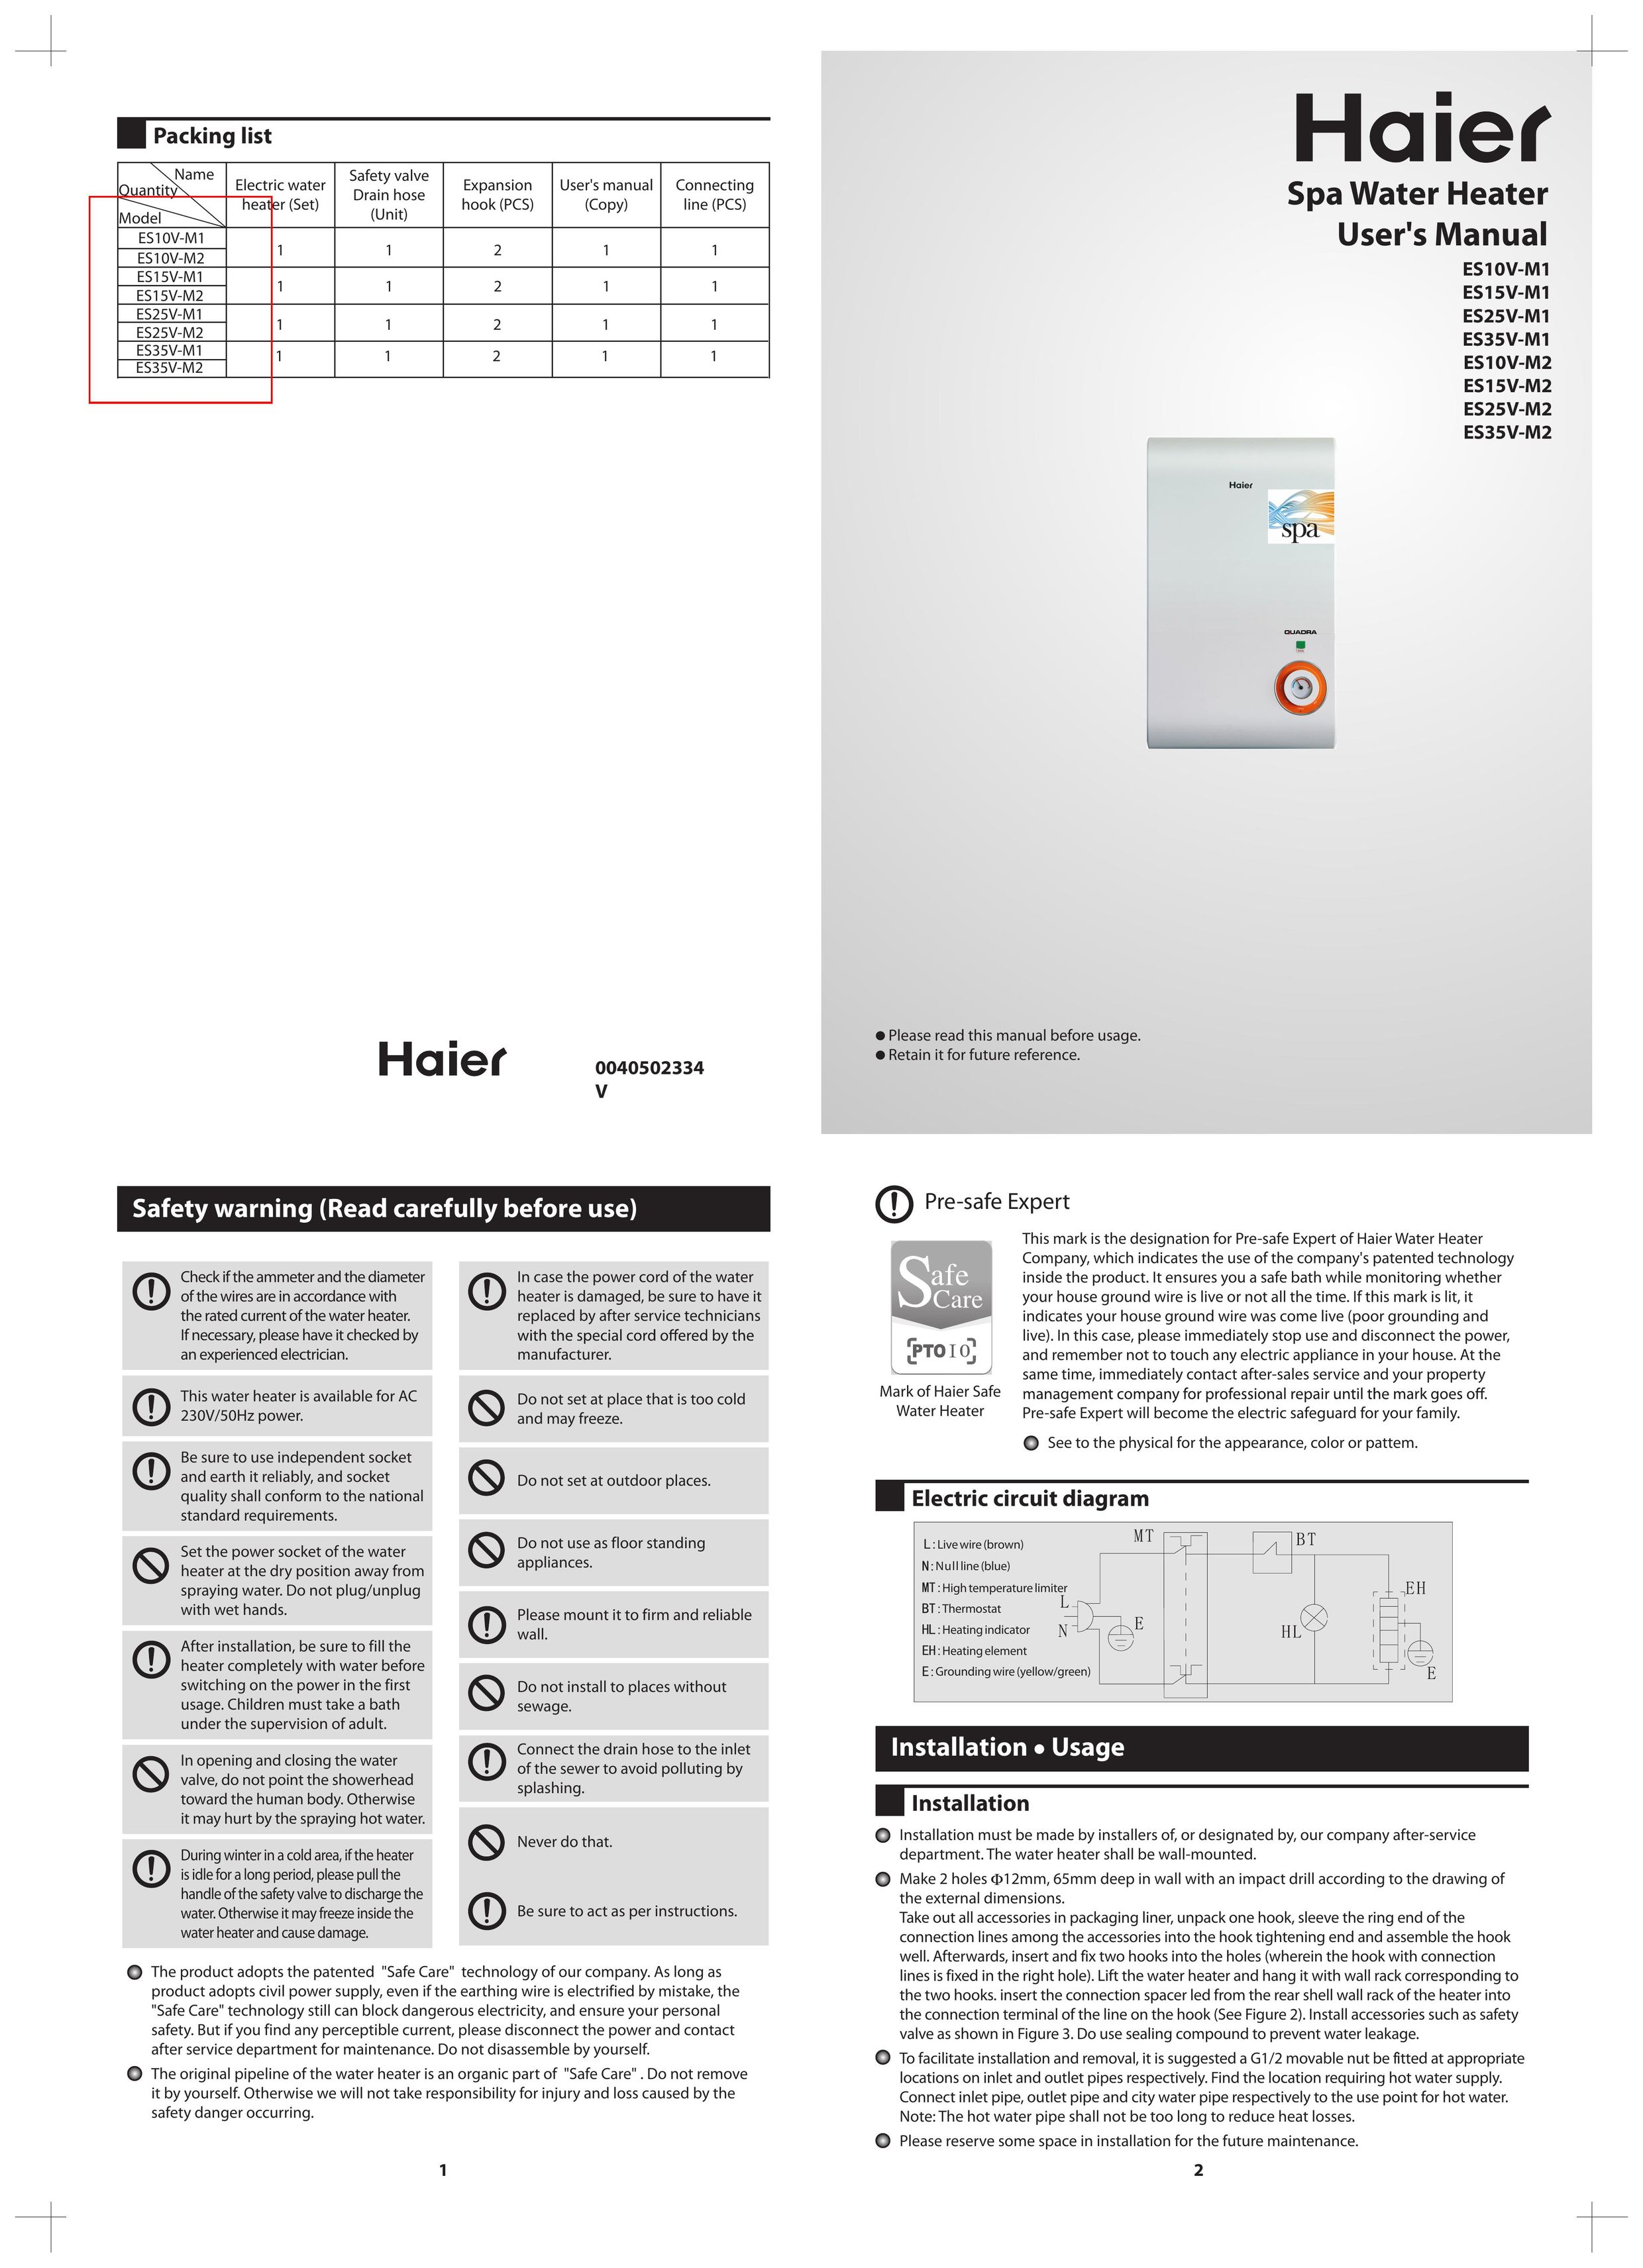 Haier ES25V-M2 Water Heater User Manual